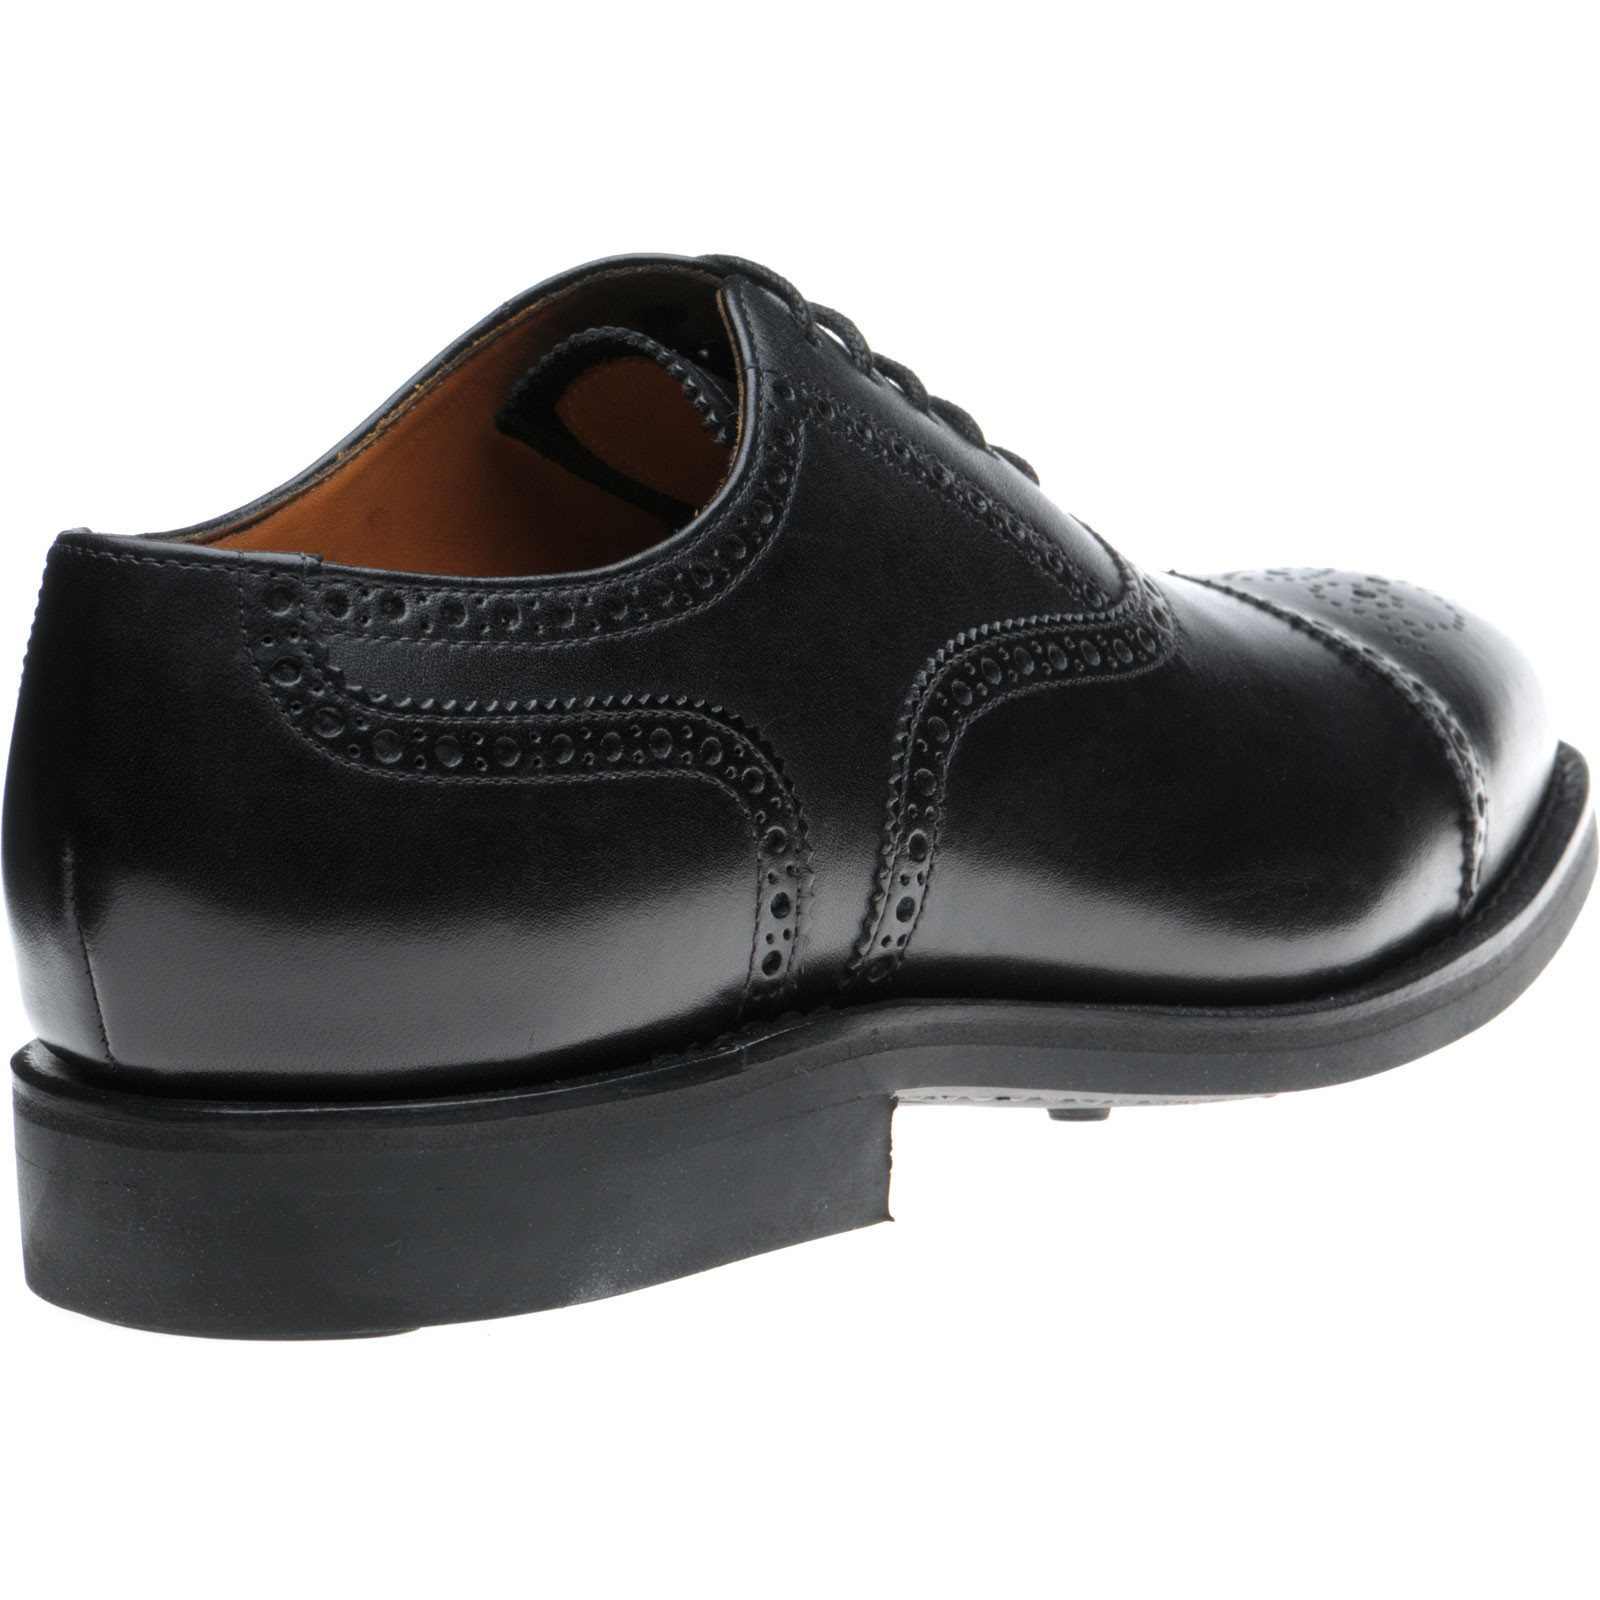 Herring shoes | Herring Classic | Reading II (Rubber) rubber-soled semi ...